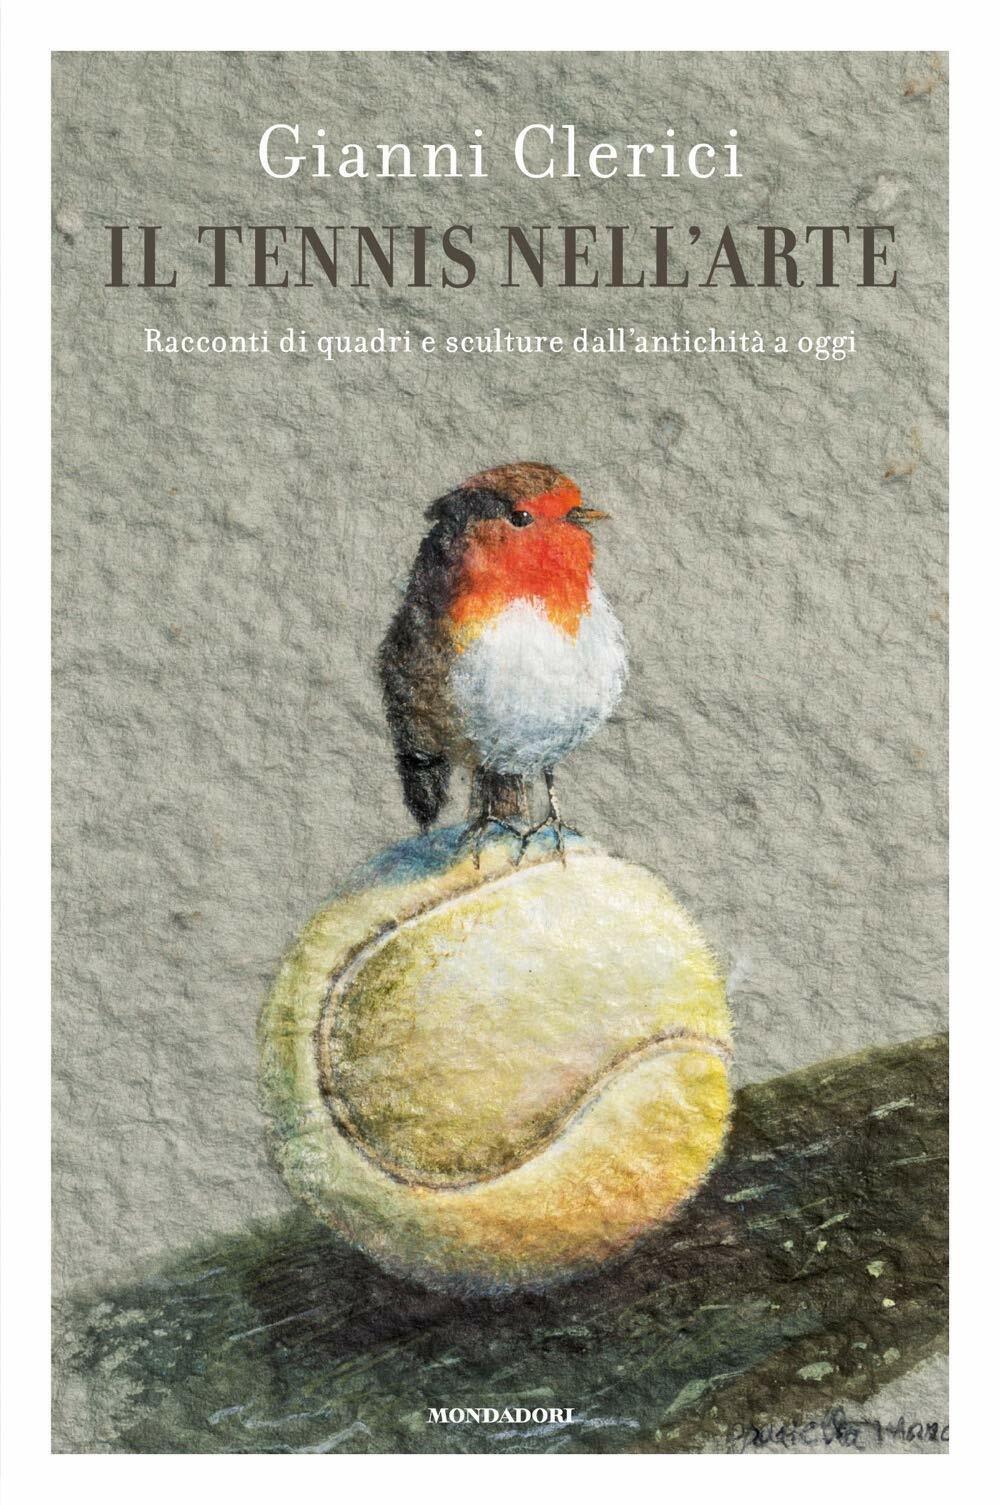 Il tennis nell'arte - Gianni Clerici - Mondadori, 2018